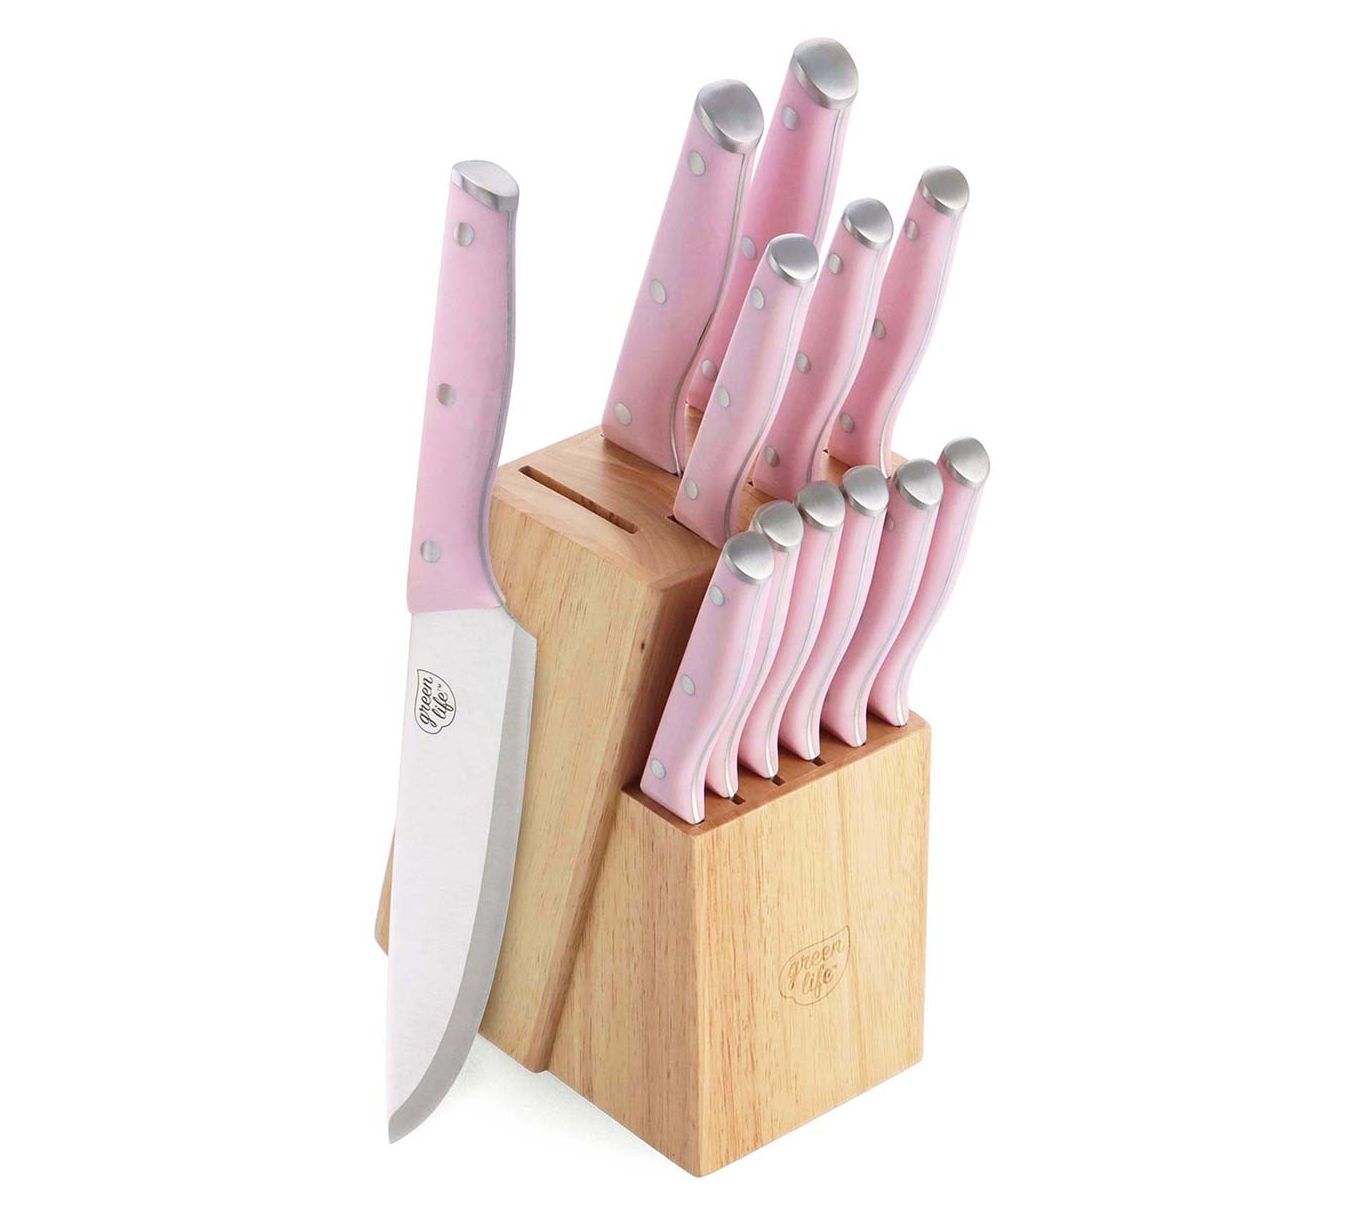 Tovla & Co. Knives for Kids 3-Piece Nylon Kitchen Baking Knife Set